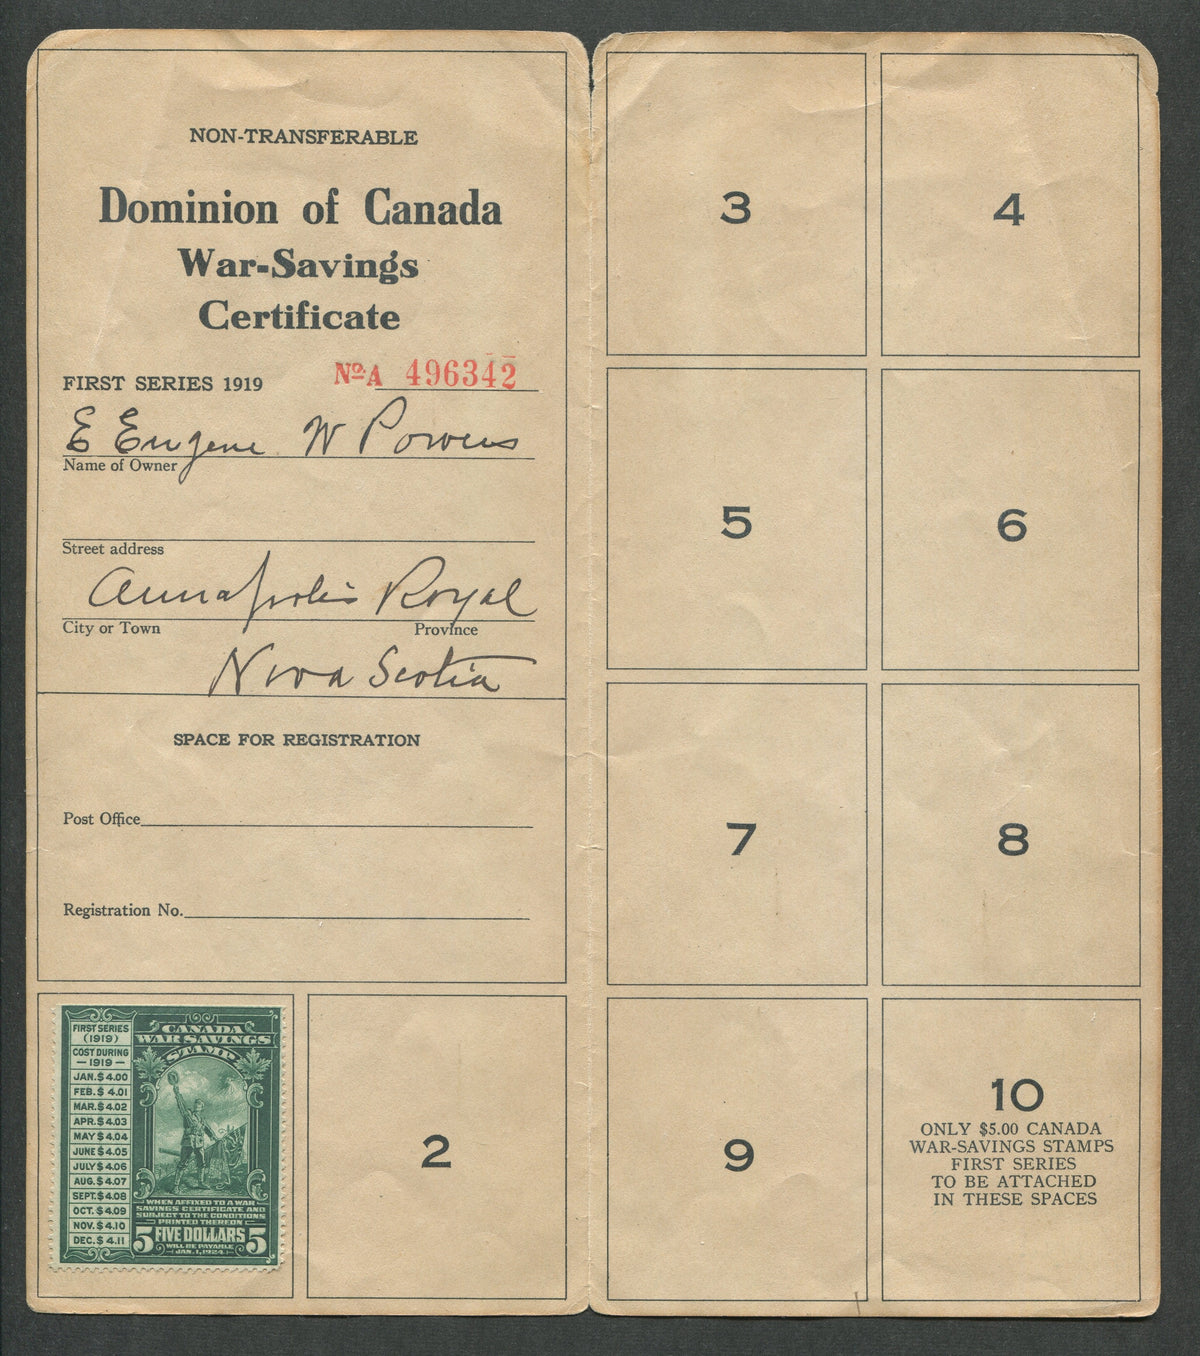 0002WS1708 - FWS2 - Used on War Savings Certificate - Deveney Stamps Ltd. Canadian Stamps